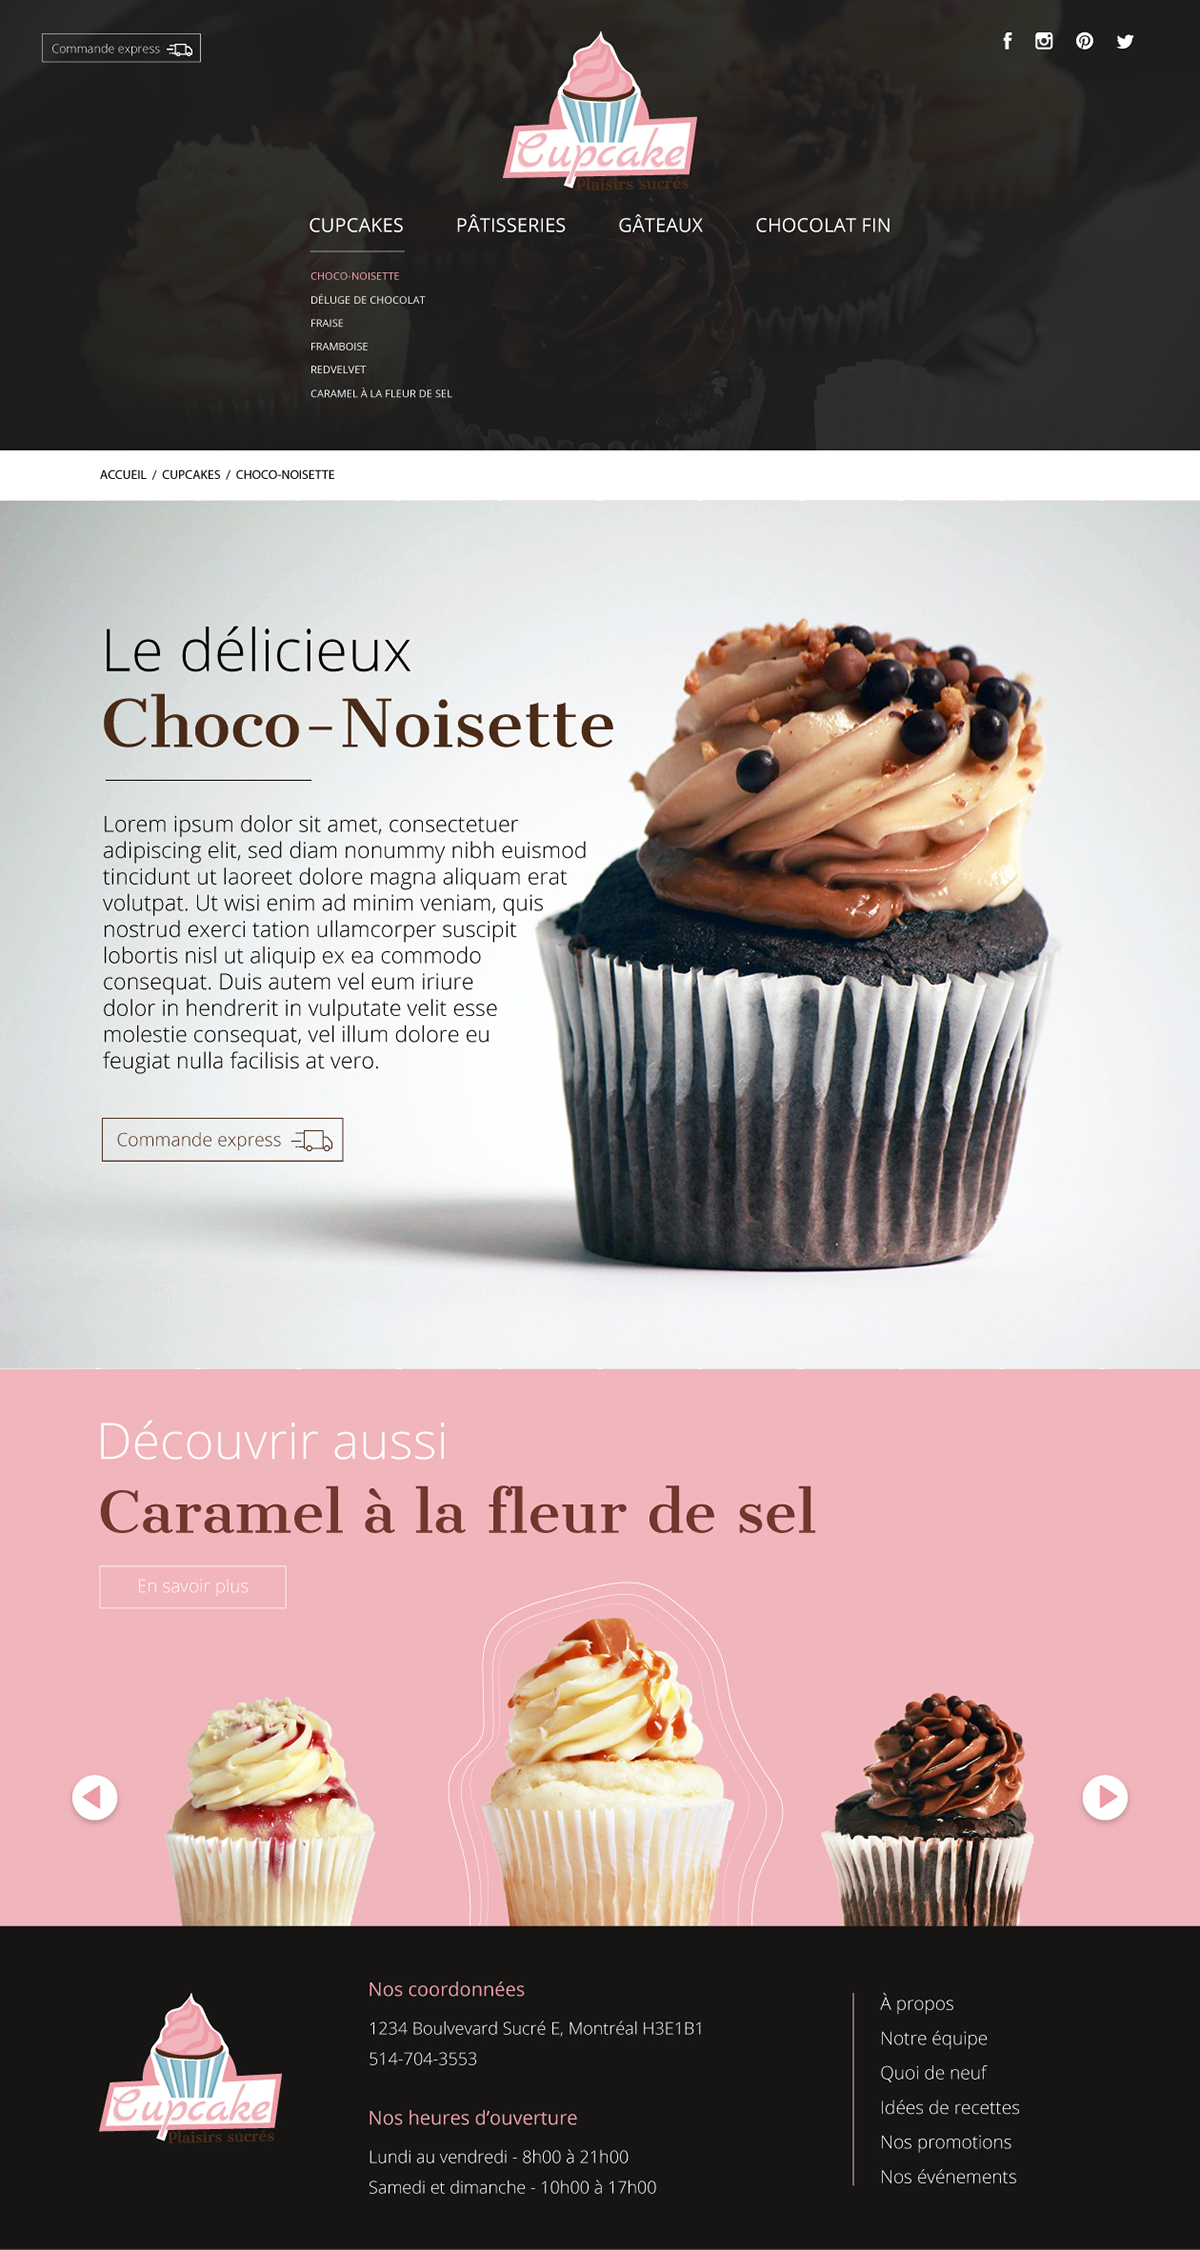 cupcake Web Design  colorful cake design